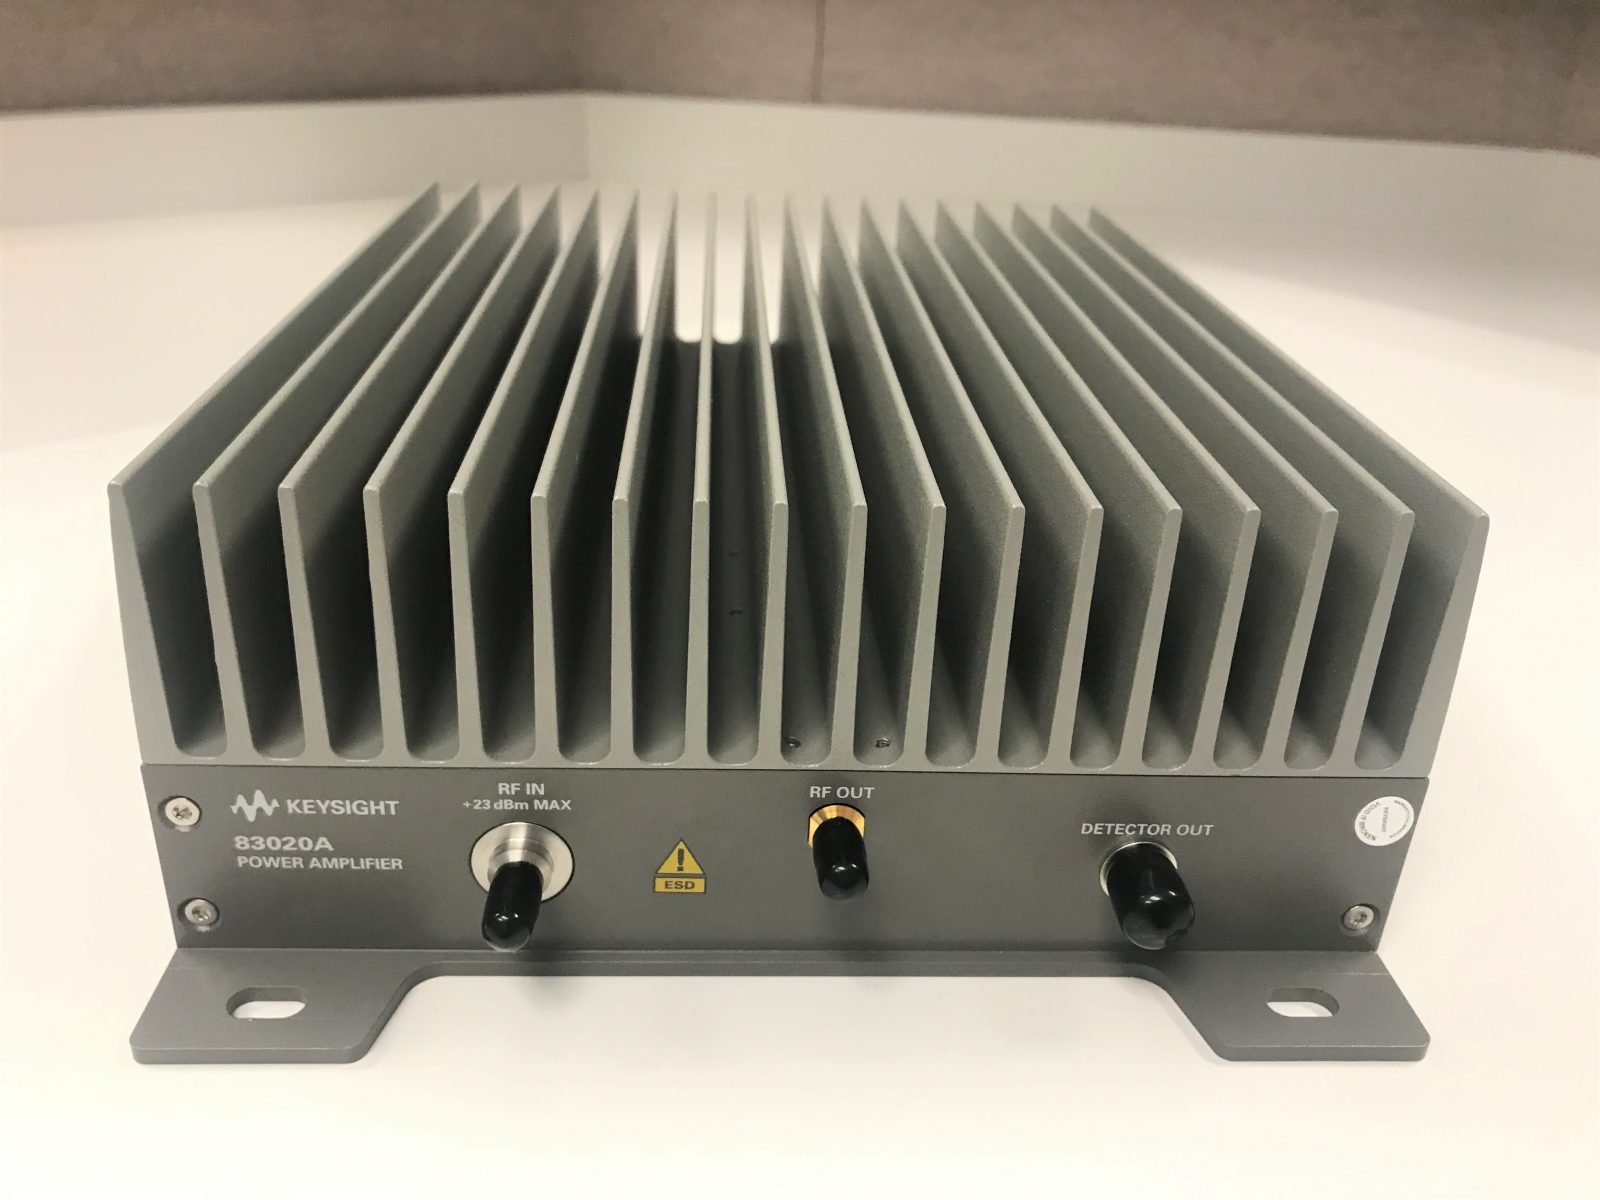 Agilent 83020A Amplifier